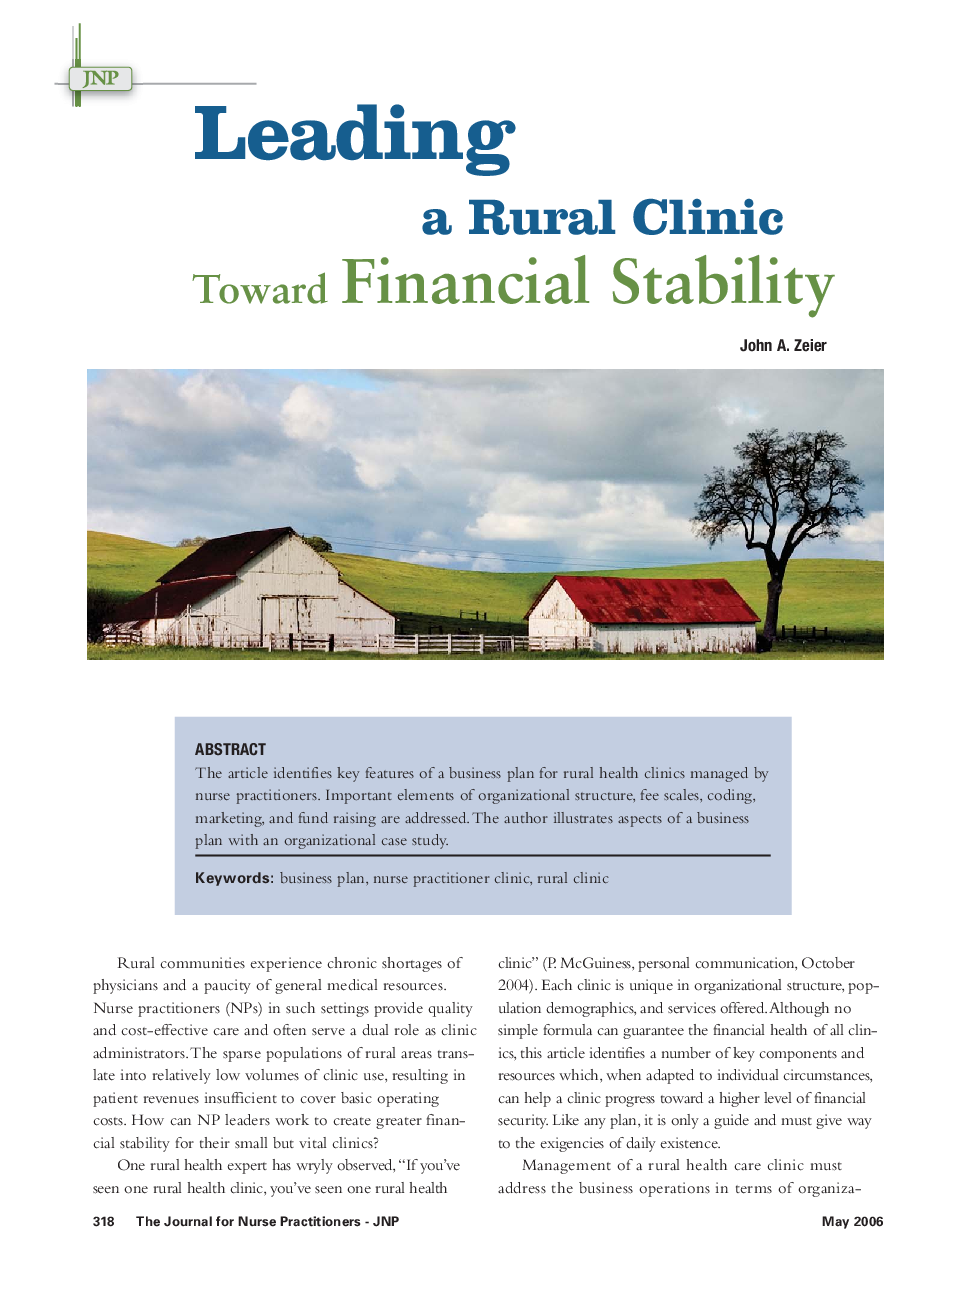 Leading a Rural Clinic Toward Financial Stability